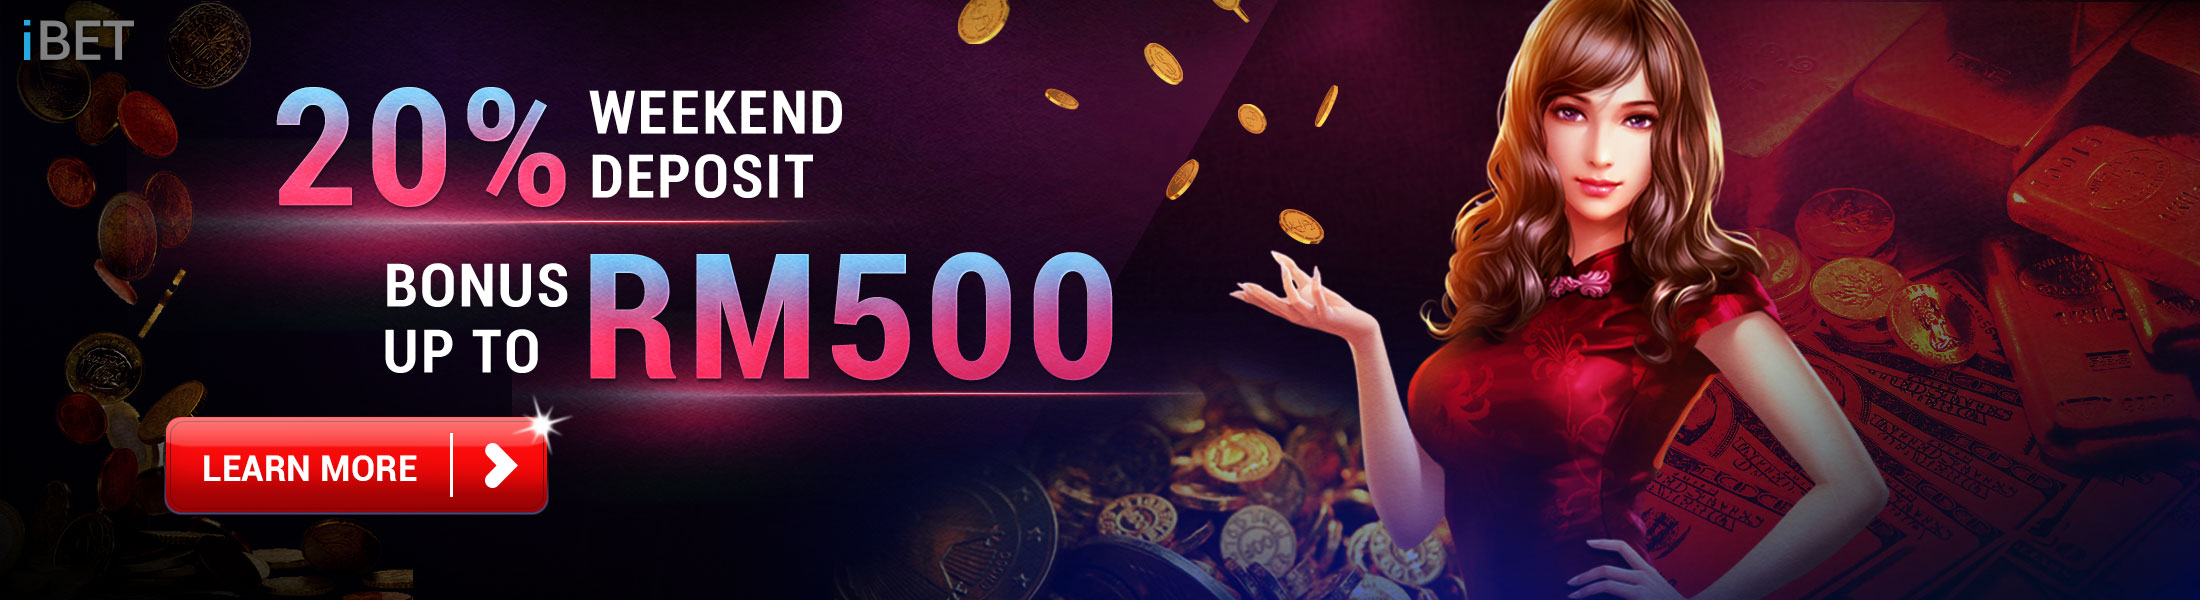 Malaysia Online Casino 20% Weekend Deposit Bonus